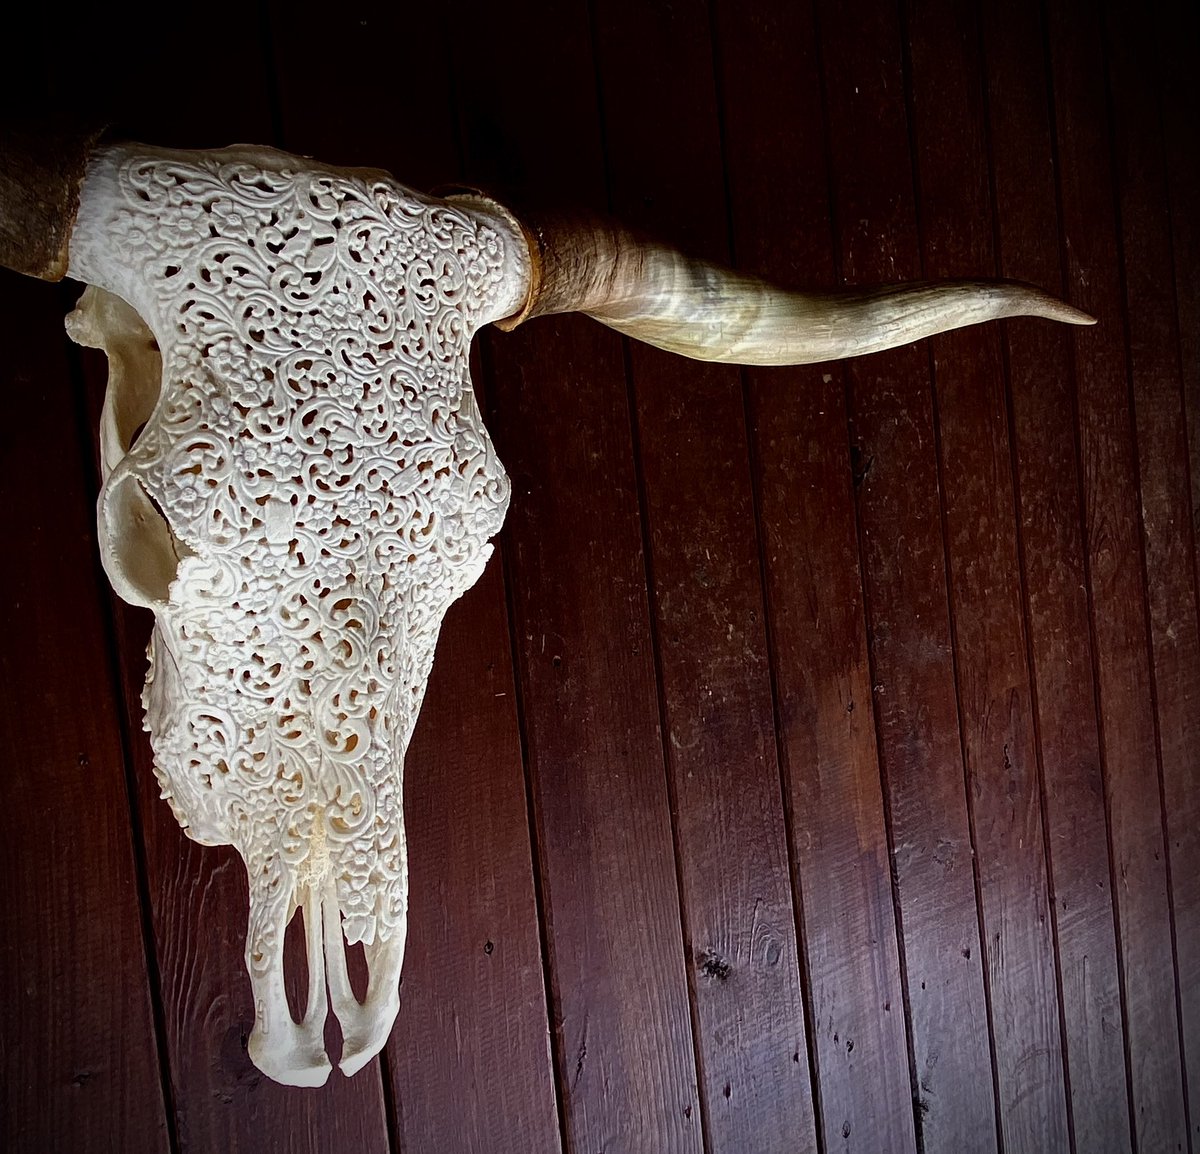 Throwback Thursday!! This was a cool project! “Abby Bandita” - fully carved skull for a TX client #Longhorns #longhorncattle #longhornskull #westernart #interiordesign #rusticart #artist #highend #skullcarving